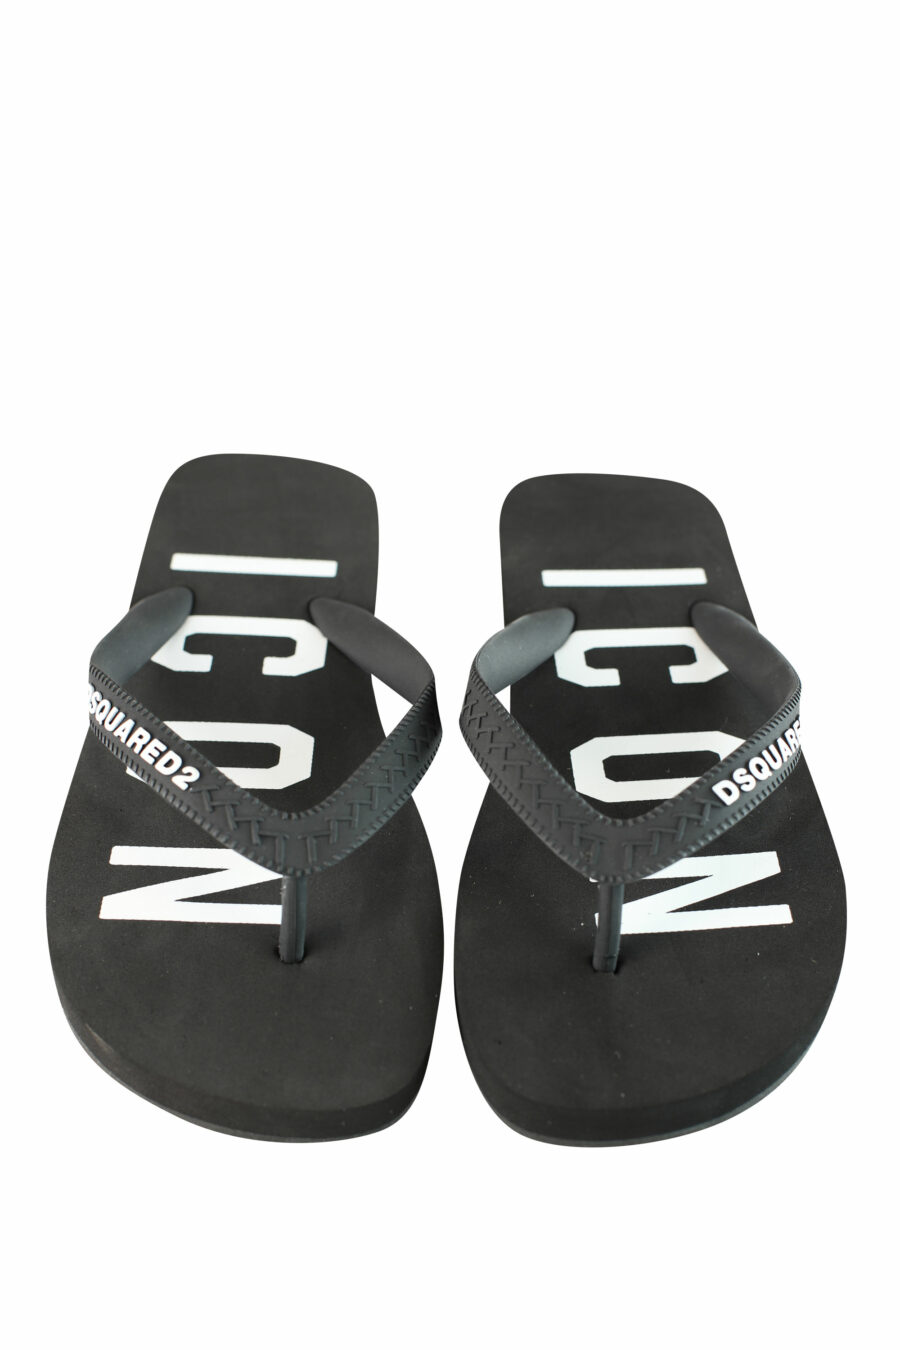 Black flip flops with white logo - IMG 1265